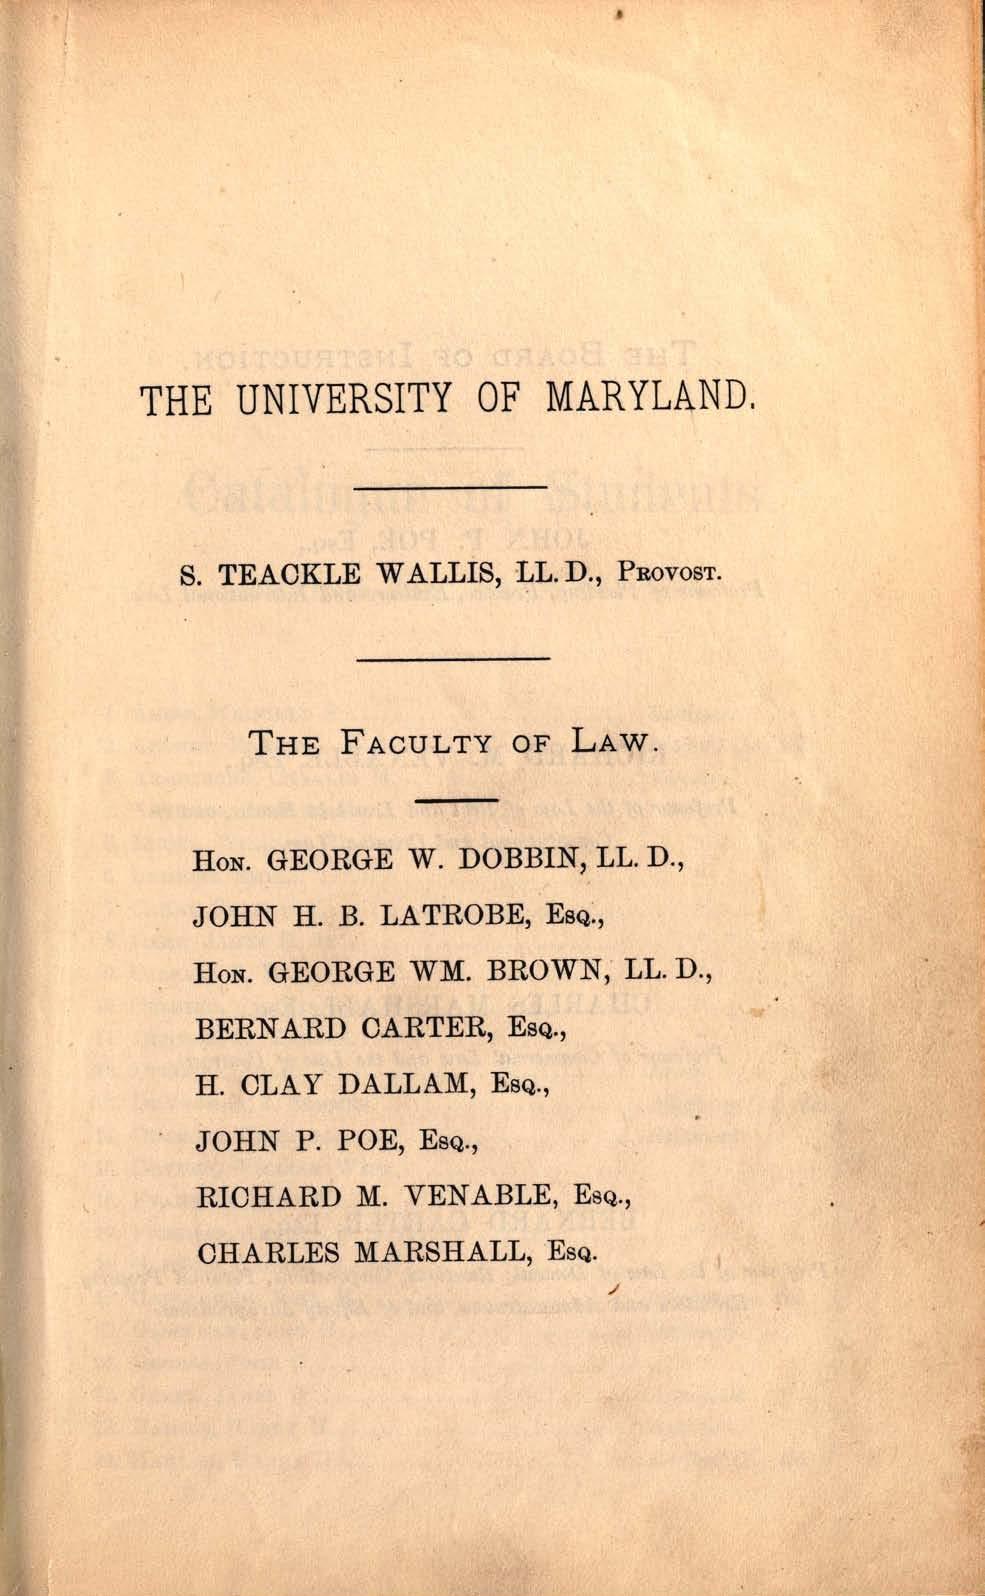 THE UNIVERSITY OF MARYLAND. S. TEACKLE WALLIS, LL.D., PROVOST. THE FACULTY OF LAW. HON. GEORGE W. DOBBIN, LL. D., JOHN H. B. LATROBE, ESQ.